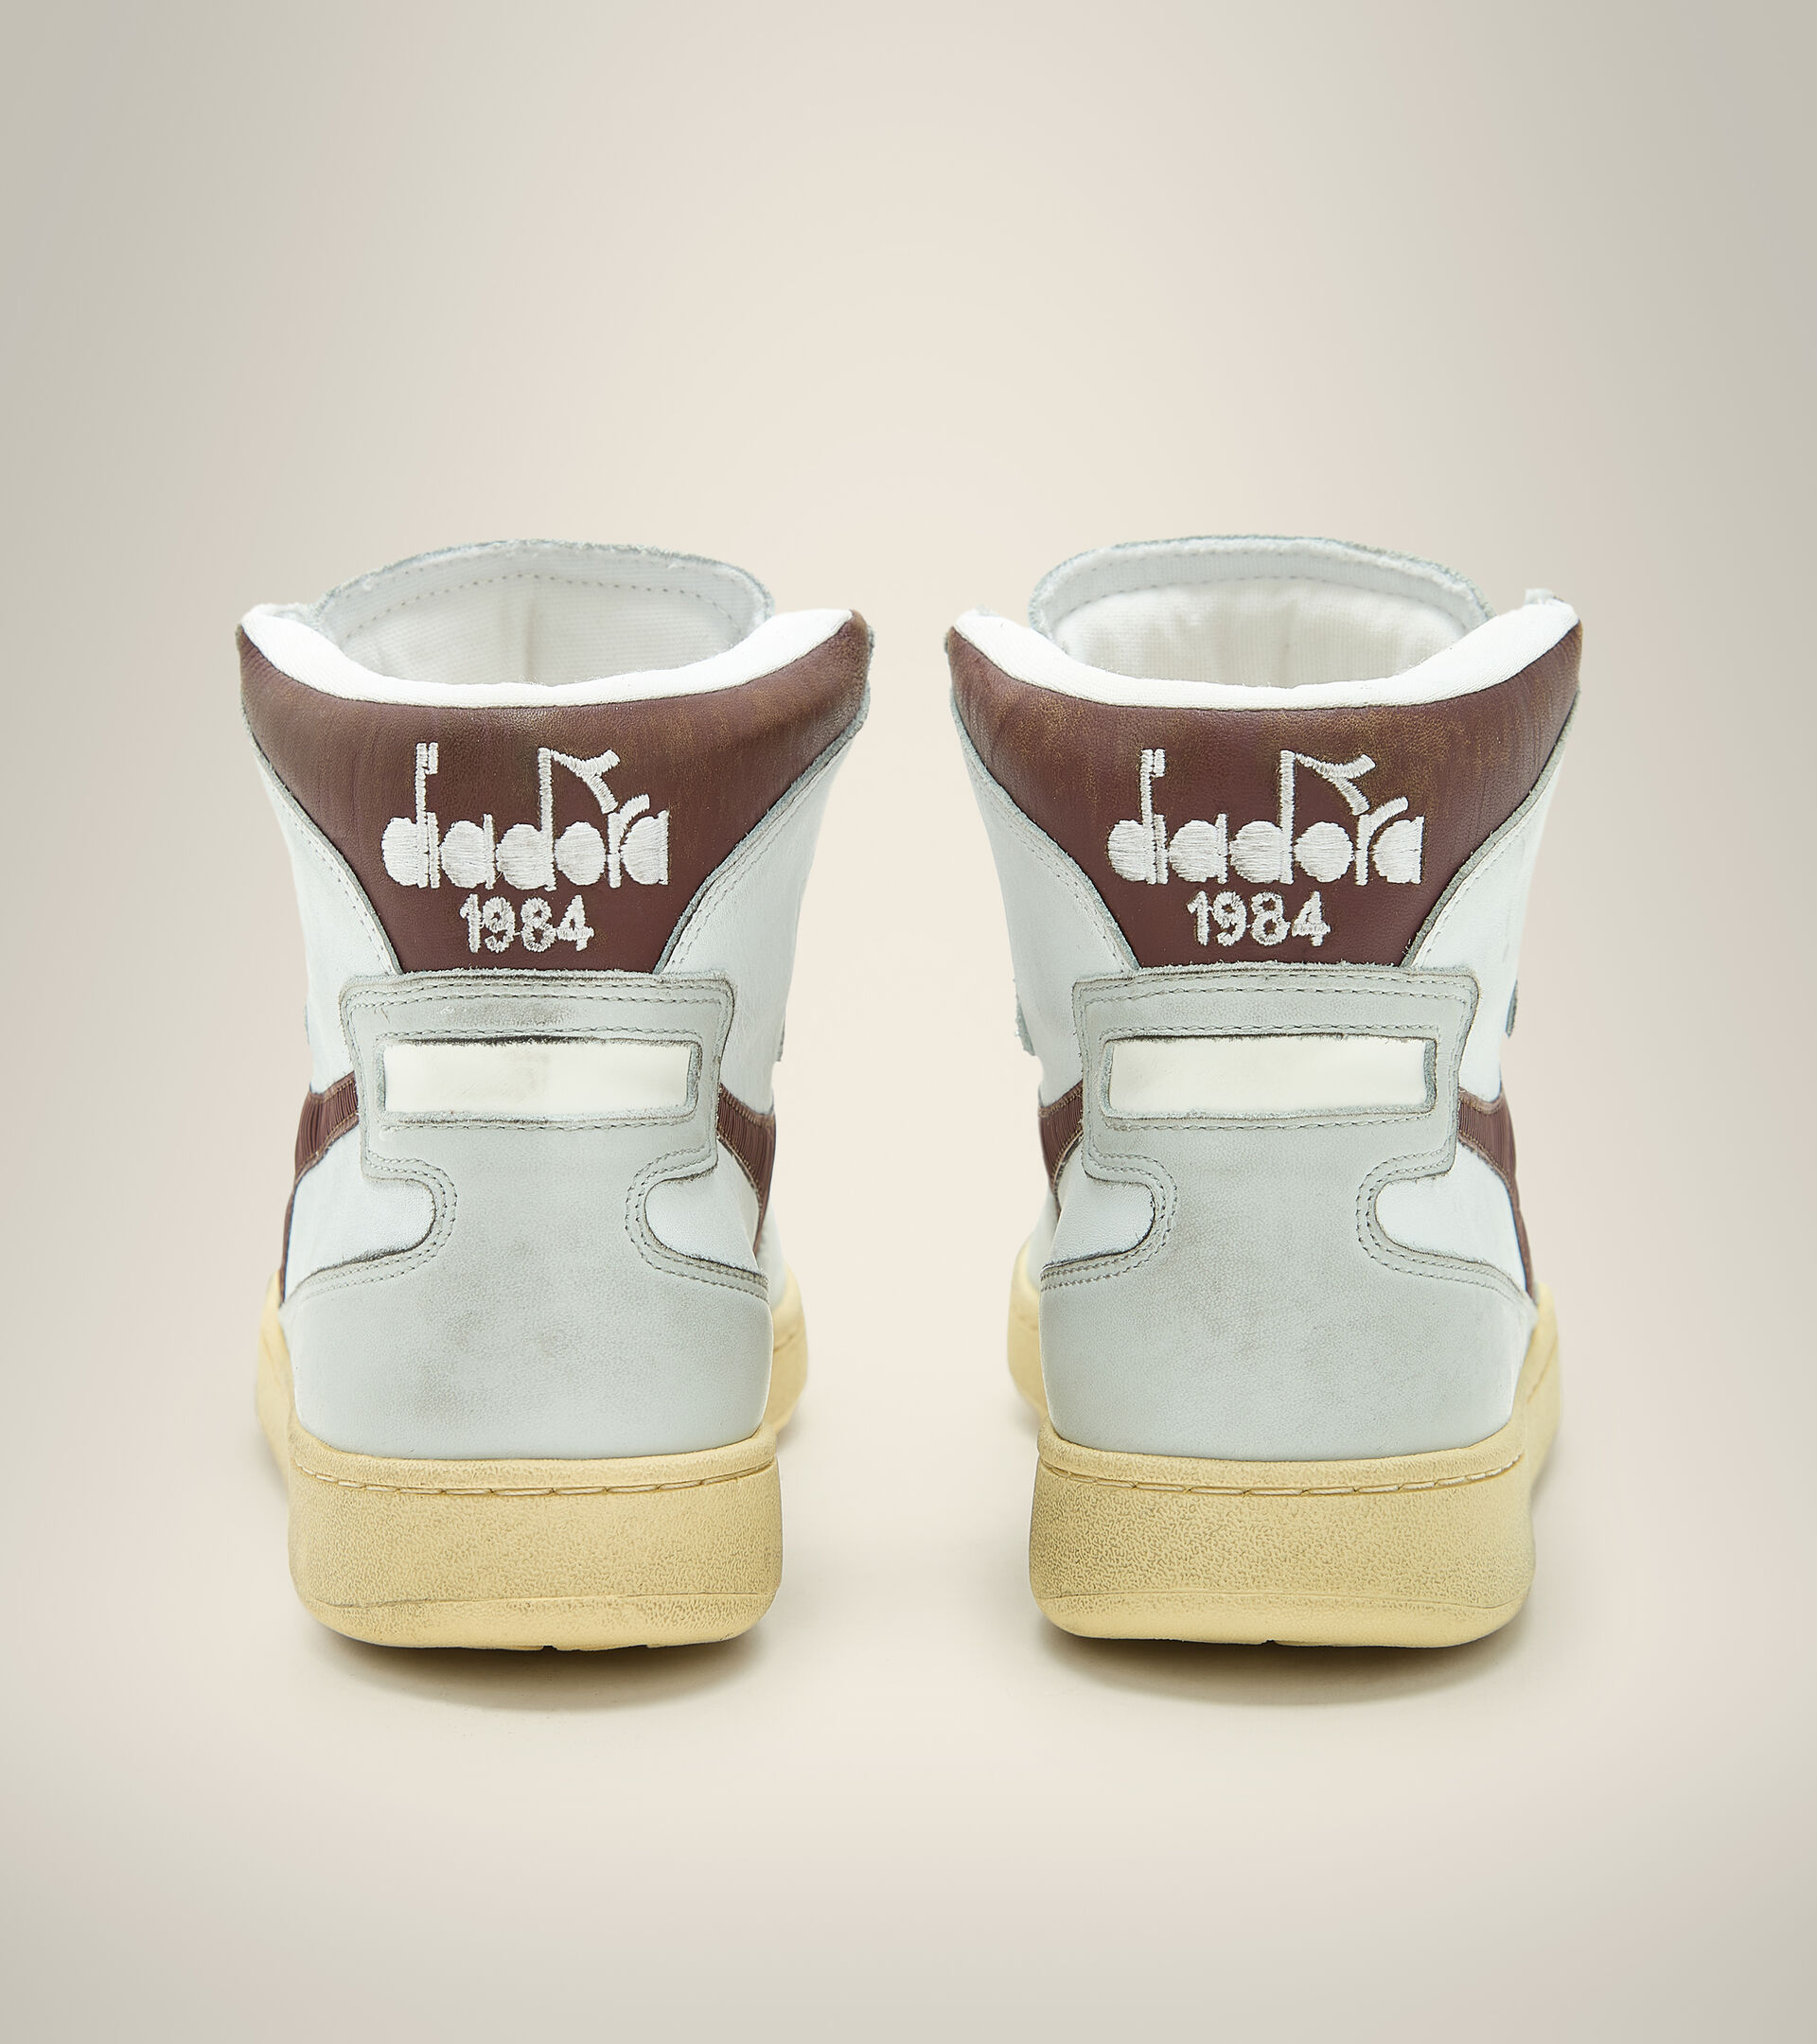 Heritage shoes - Unisex MI BASKET USED WHITE/DECADENT CHOCOLATE - Diadora